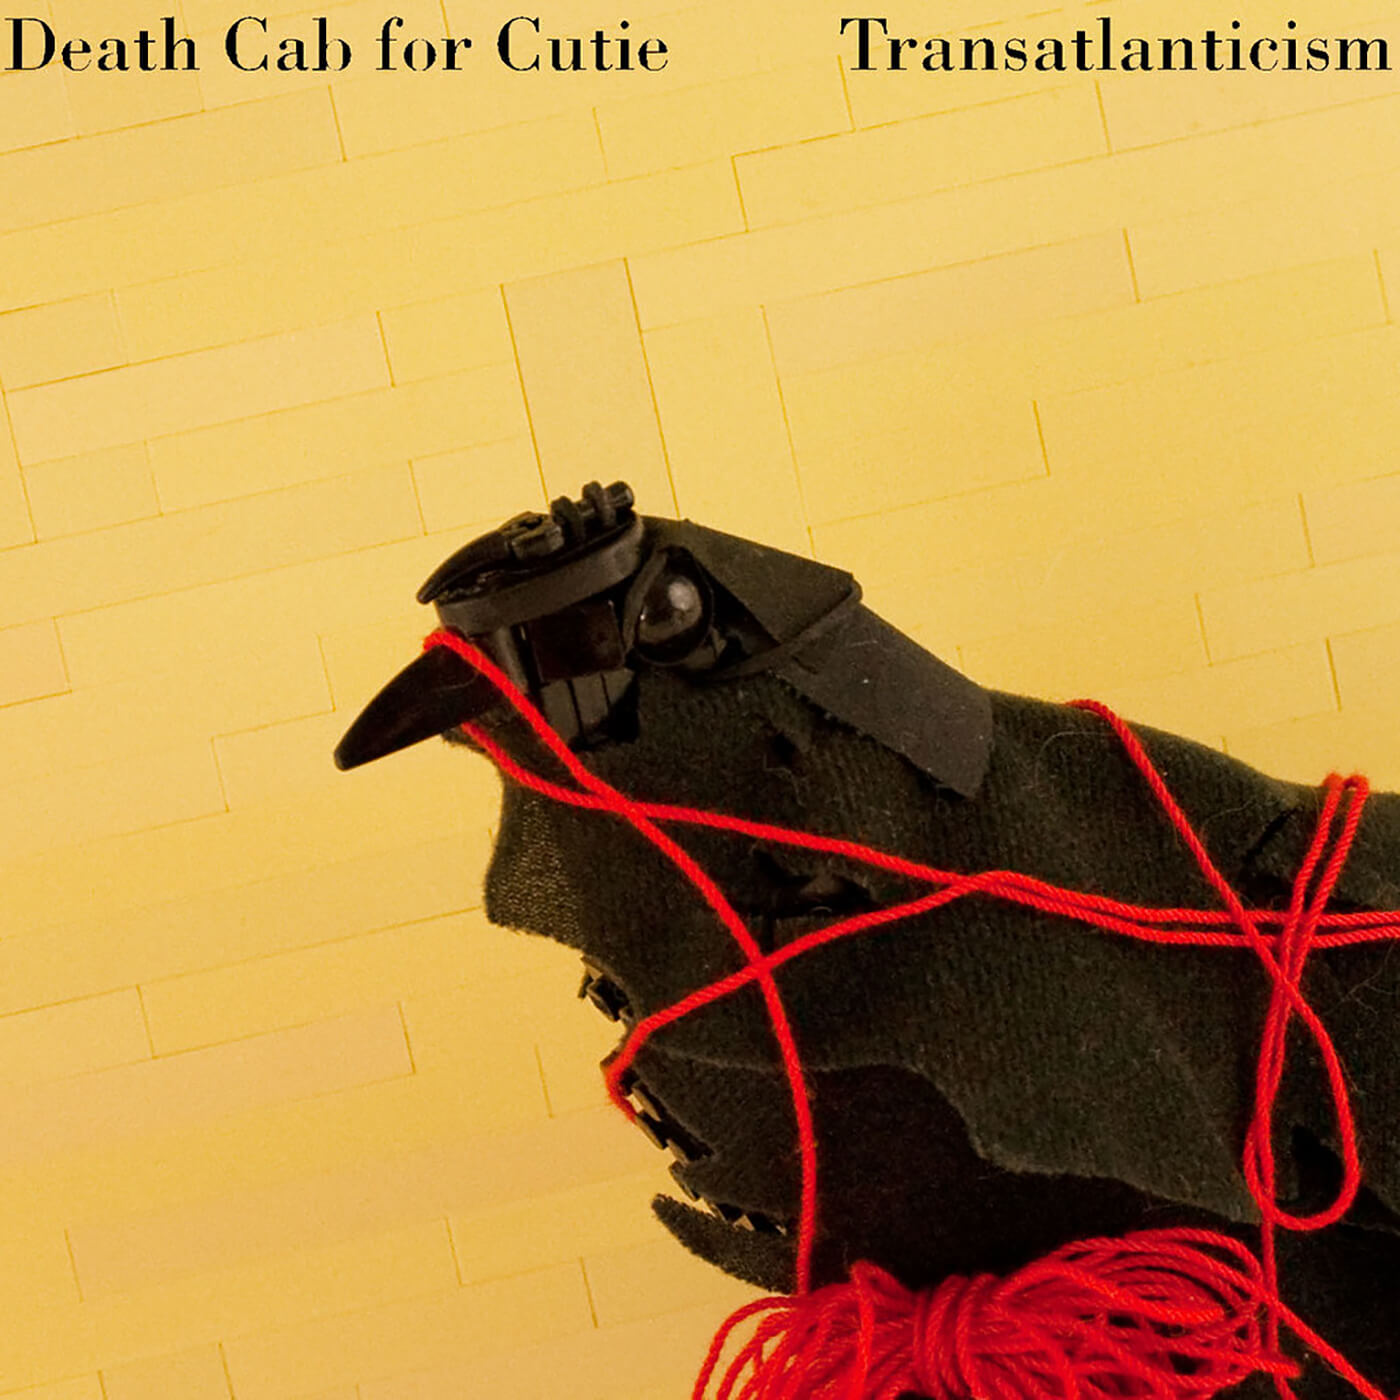 Death Cab For Cutie - Transatlanticism